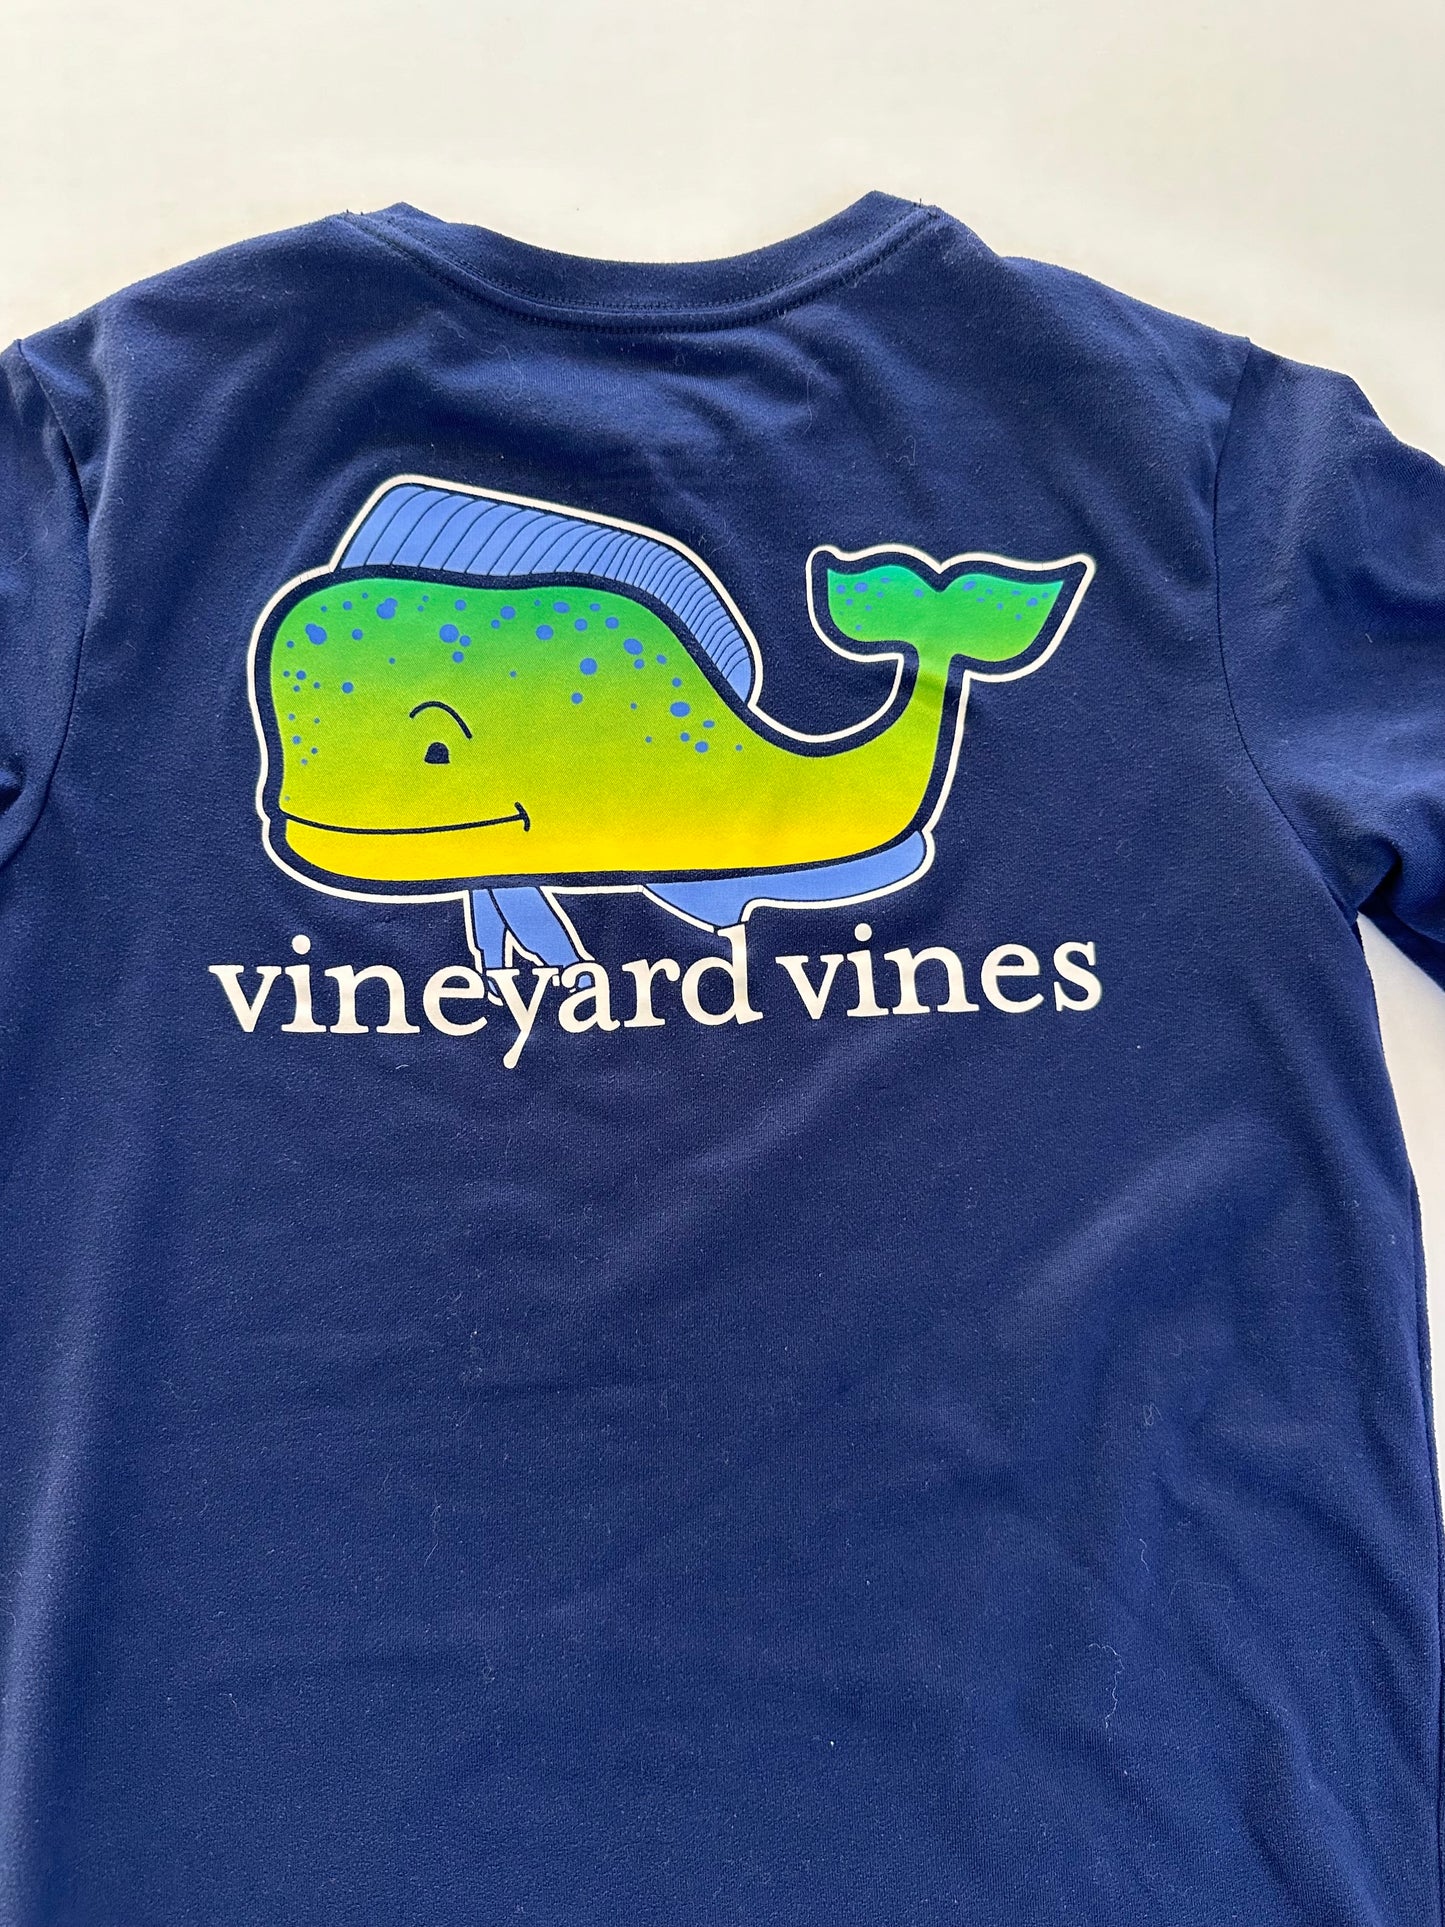 Vineyard Vines Boys Medium 10-12 performance T shirt navy